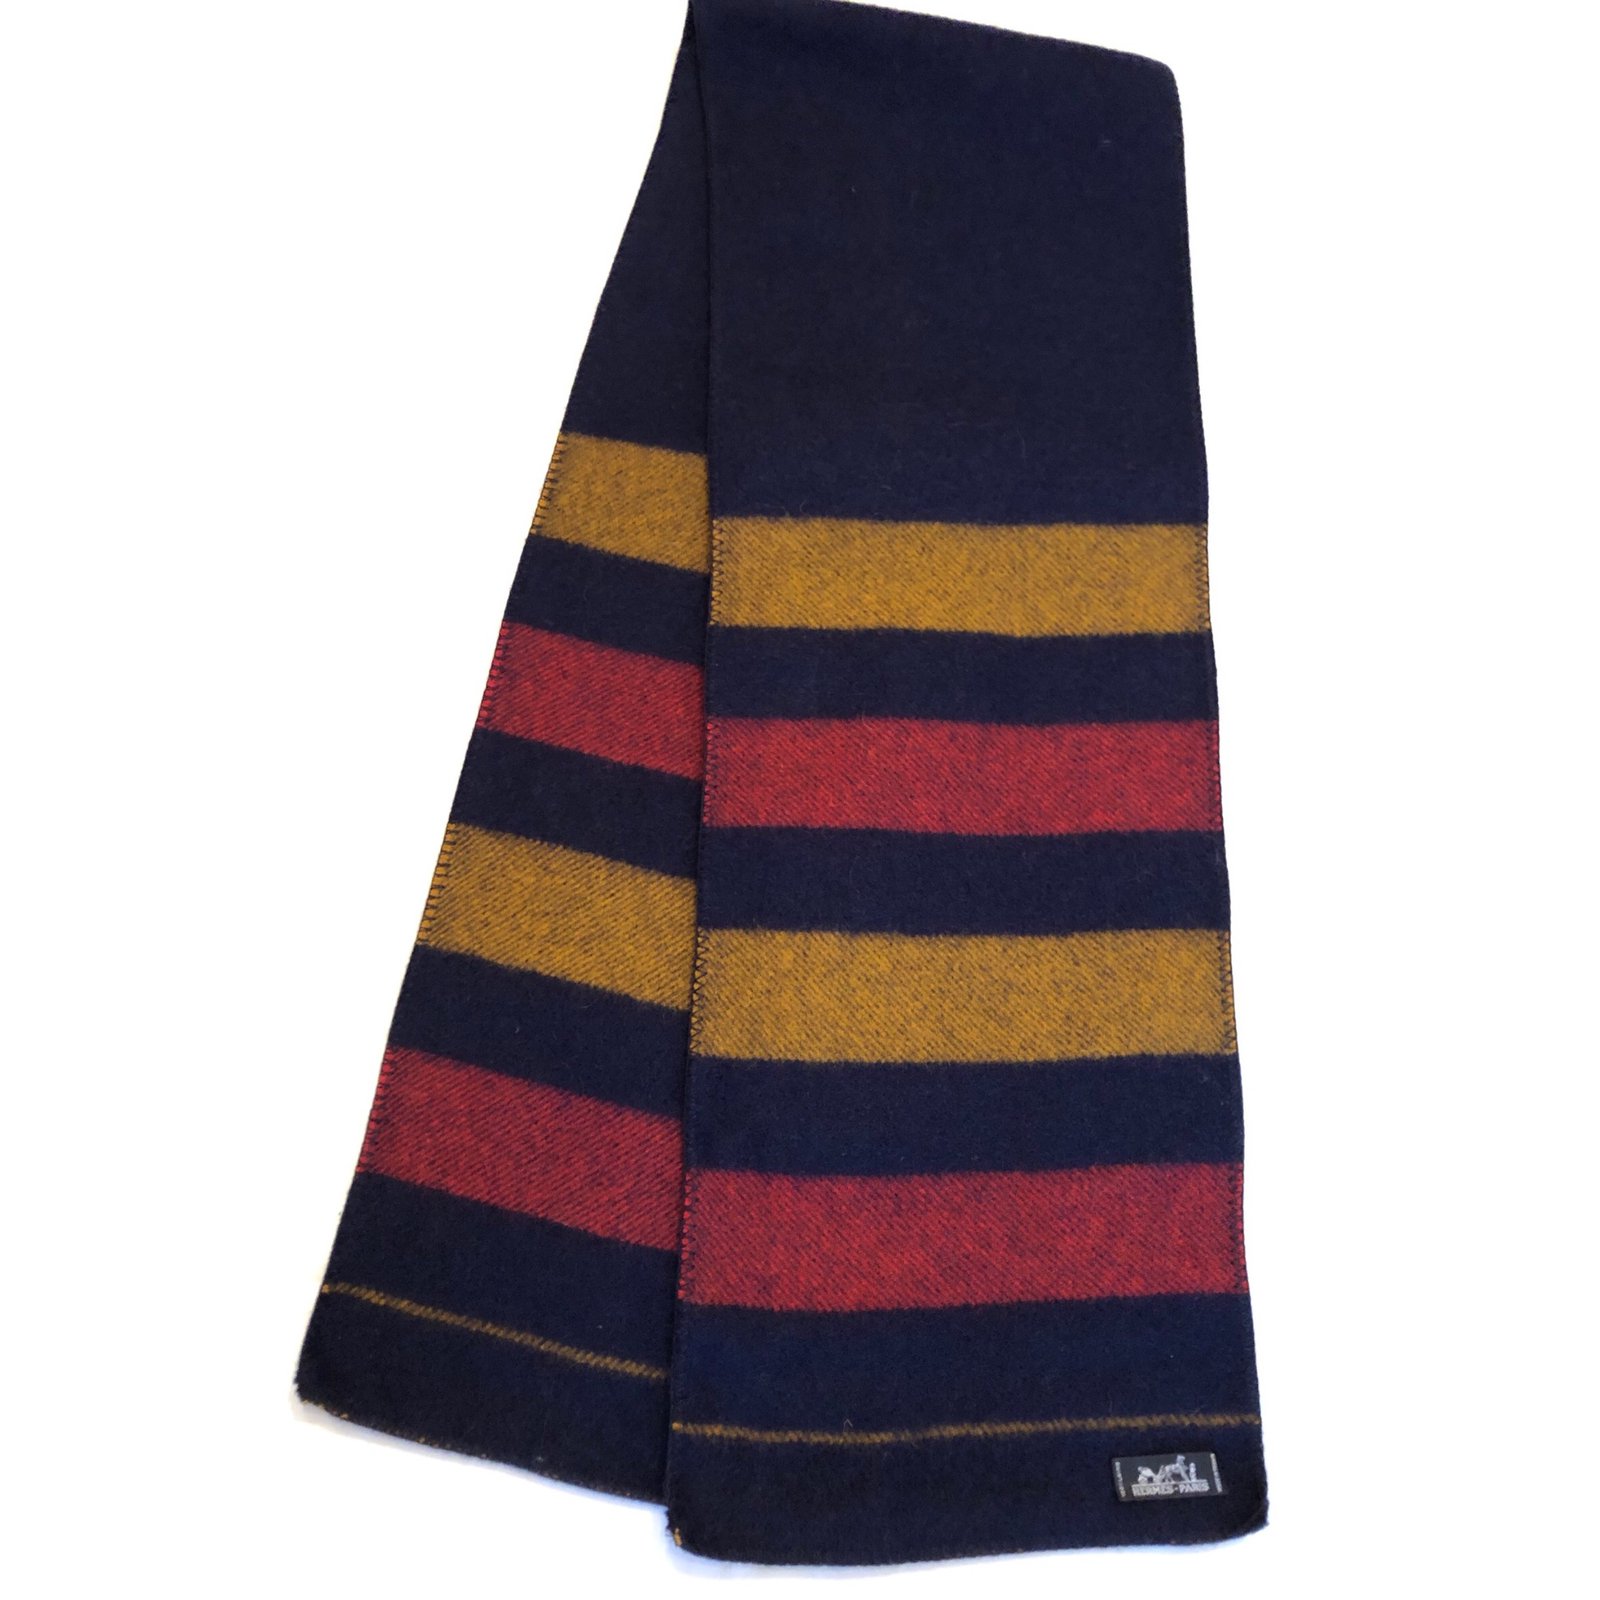 rocabar hermes scarf